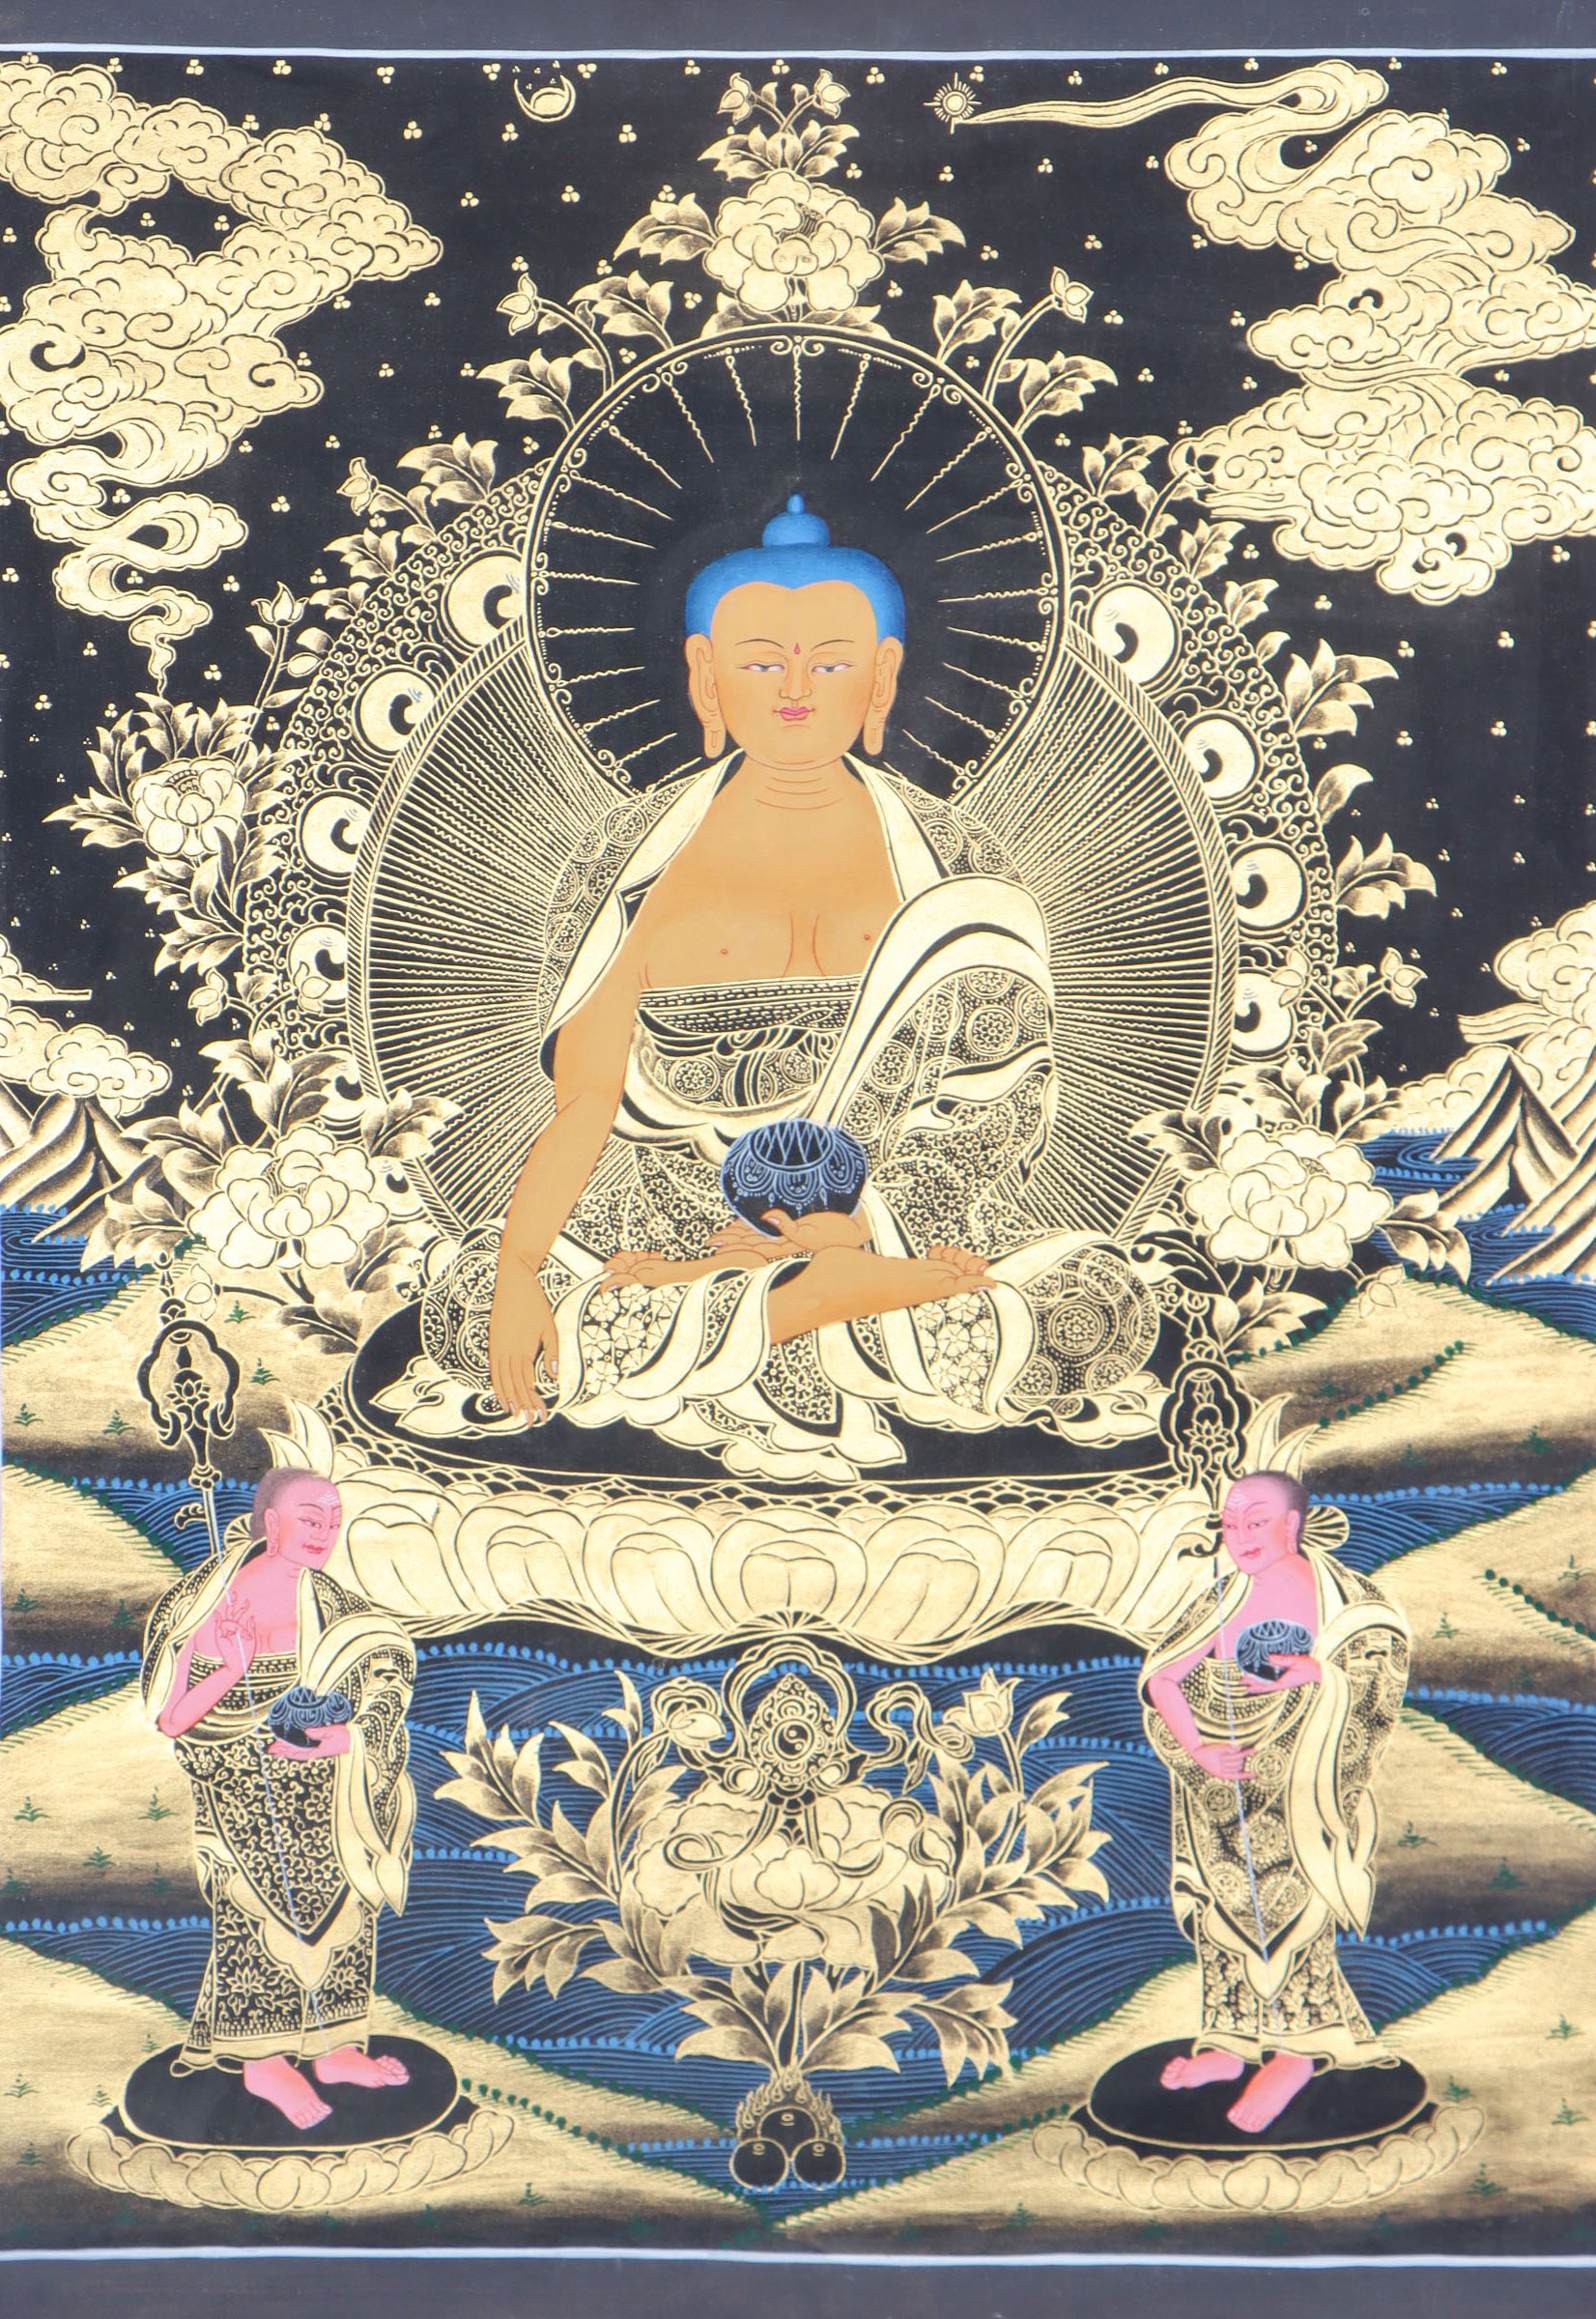 Shakyamuni Buddha Thangka Painting for enlightment.